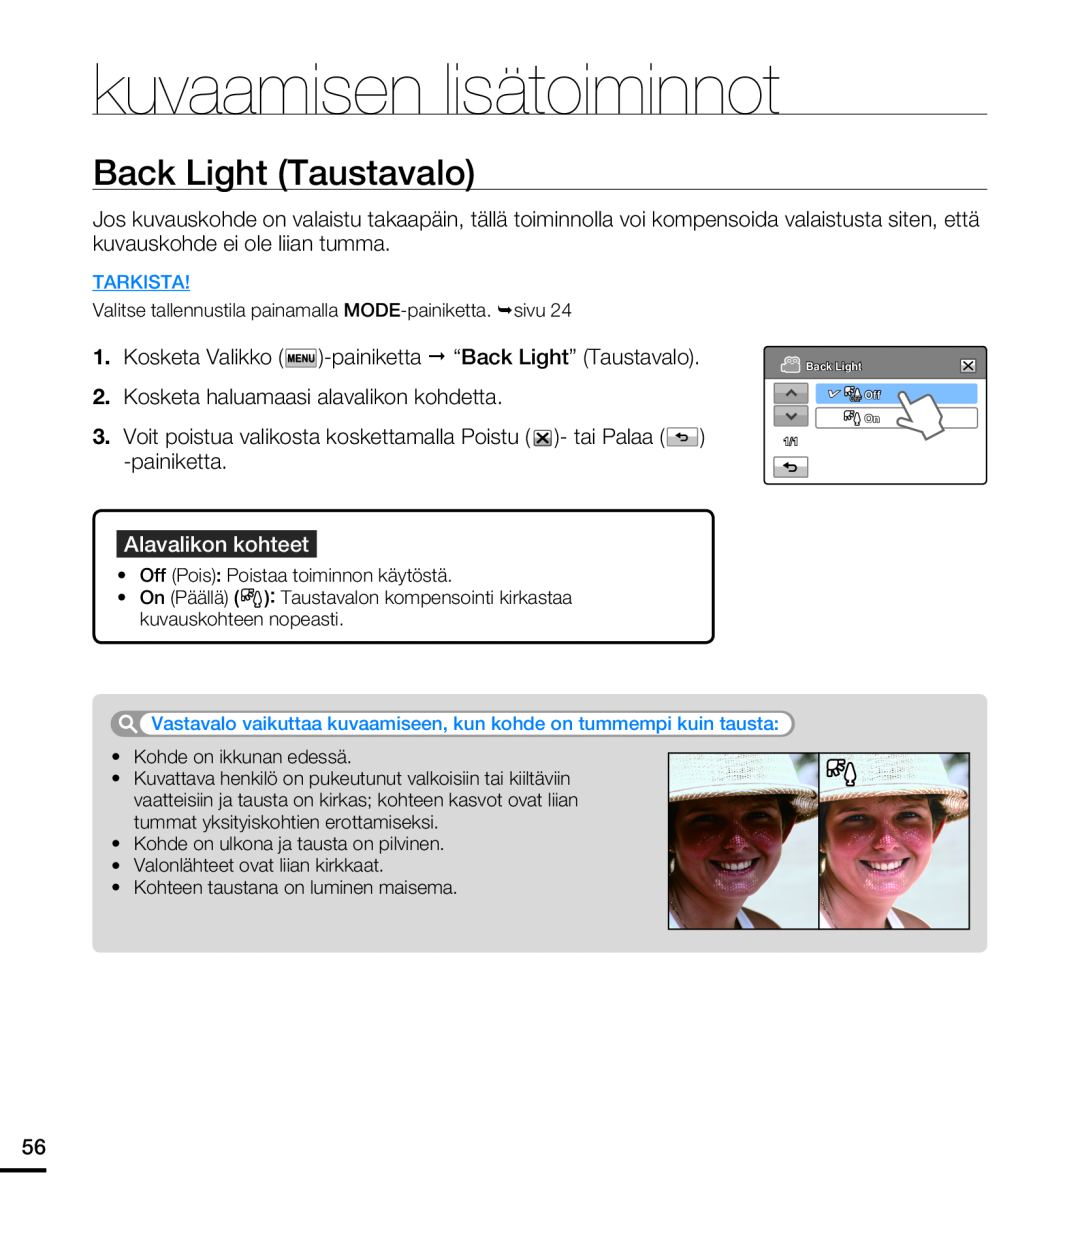 Samsung HMX-T10WP/EDC, HMX-T10BP/EDC manual Back Light Taustavalo, kuvaamisen lisätoiminnot, Alavalikon kohteet, On 1/1 